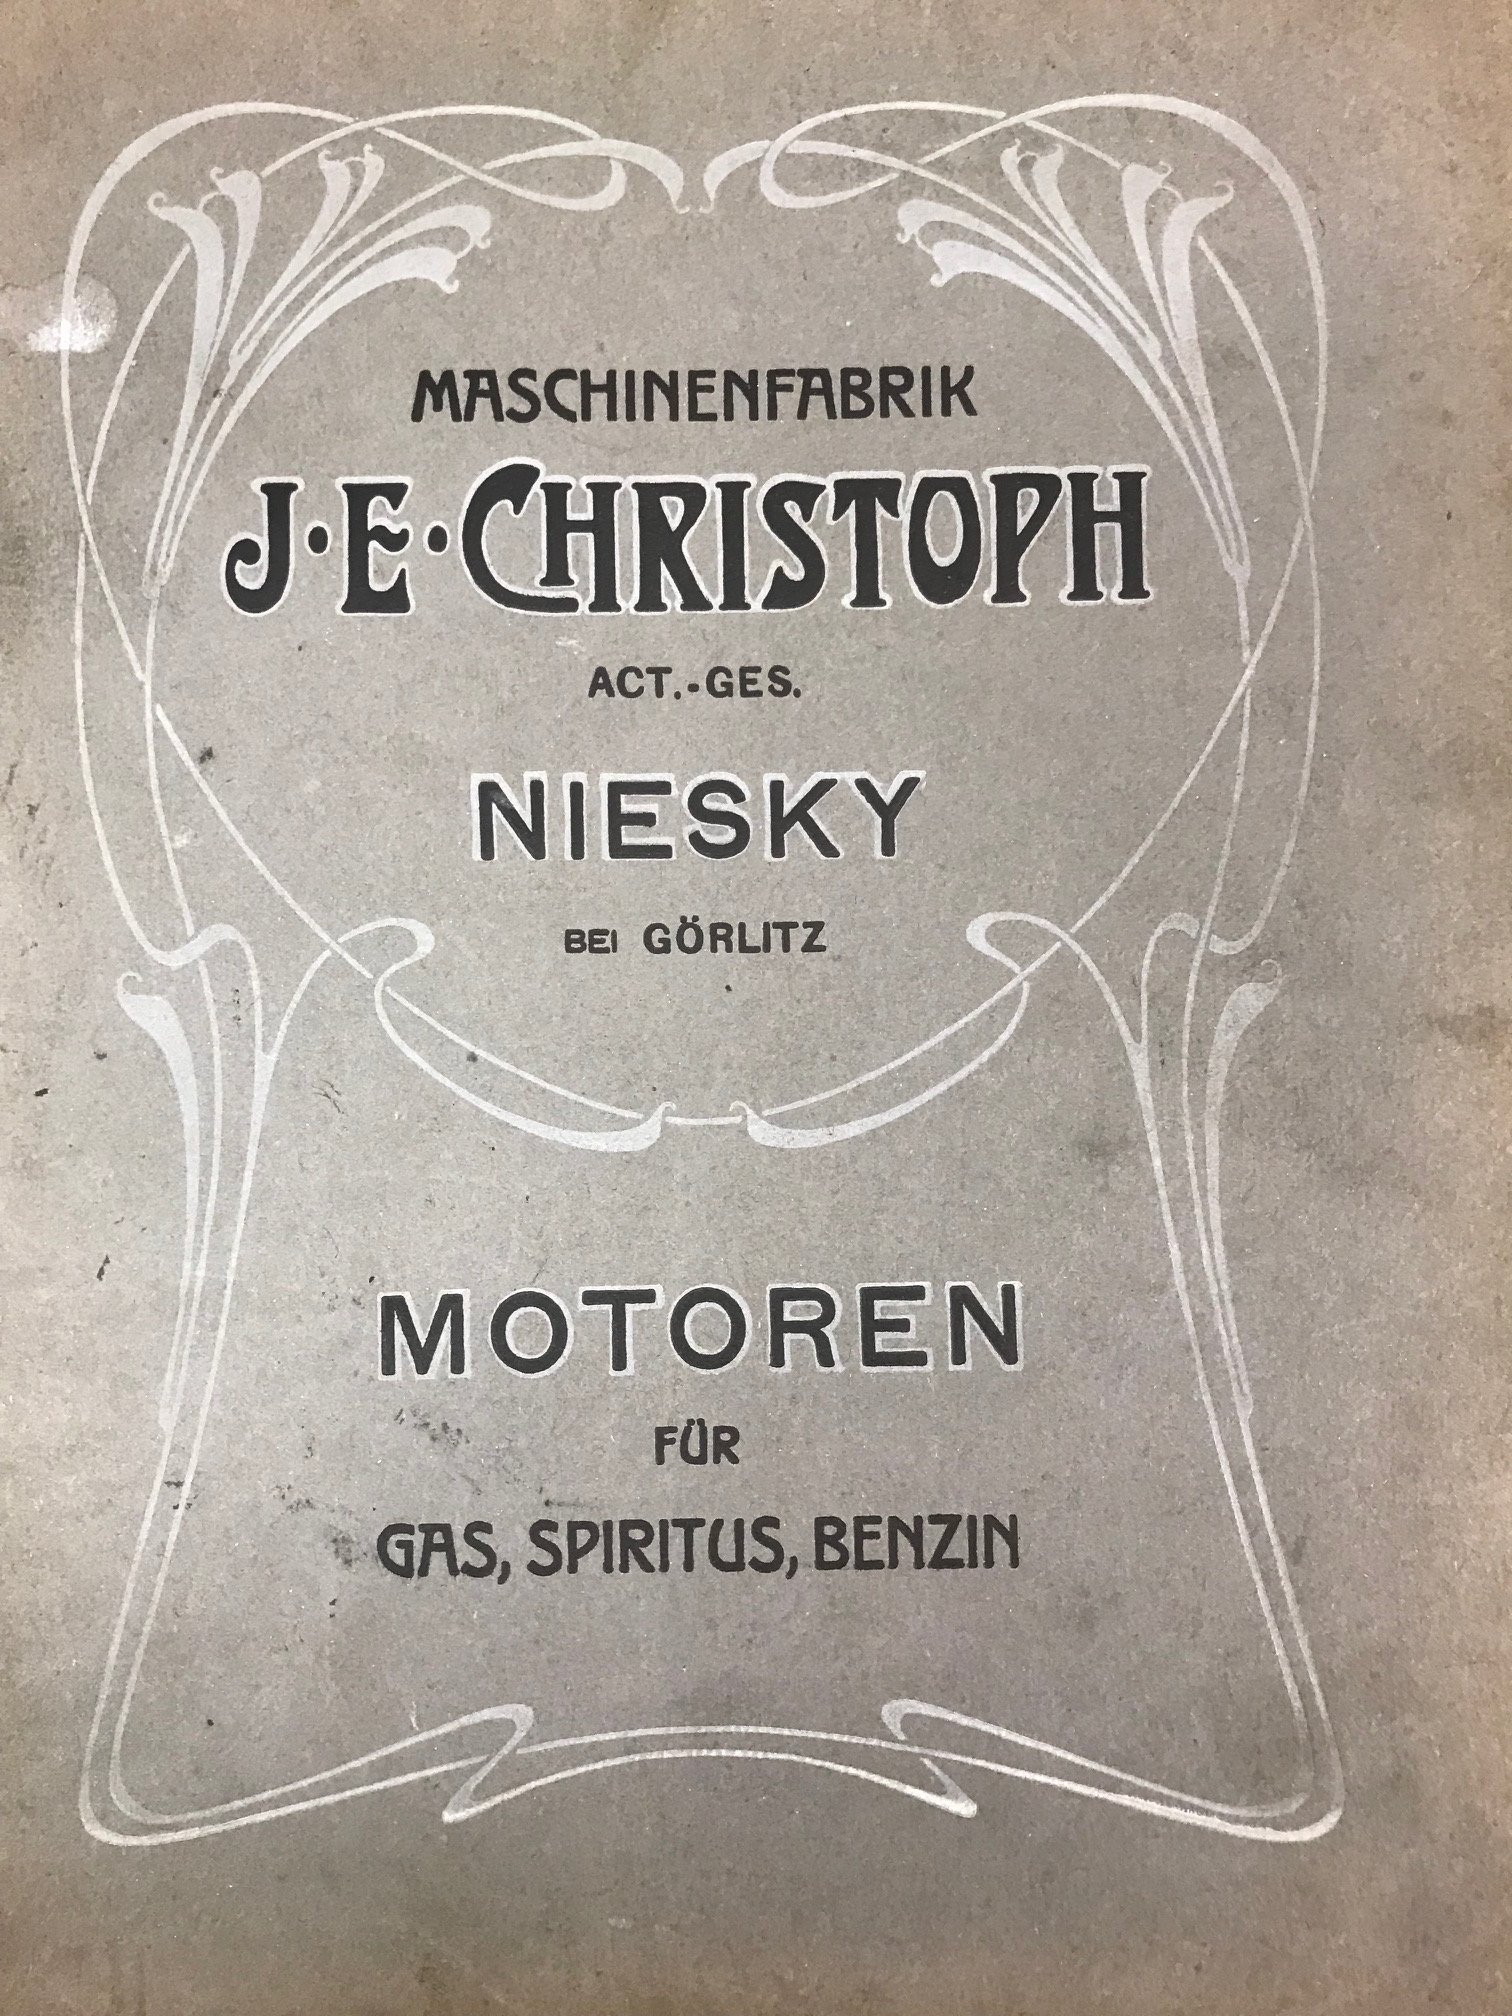 Firmenkatalog Maschinenfabrik J. E. Christoph - Motoren für Gas, Spiritus, Benzin (Museum Niesky CC BY-NC-ND)